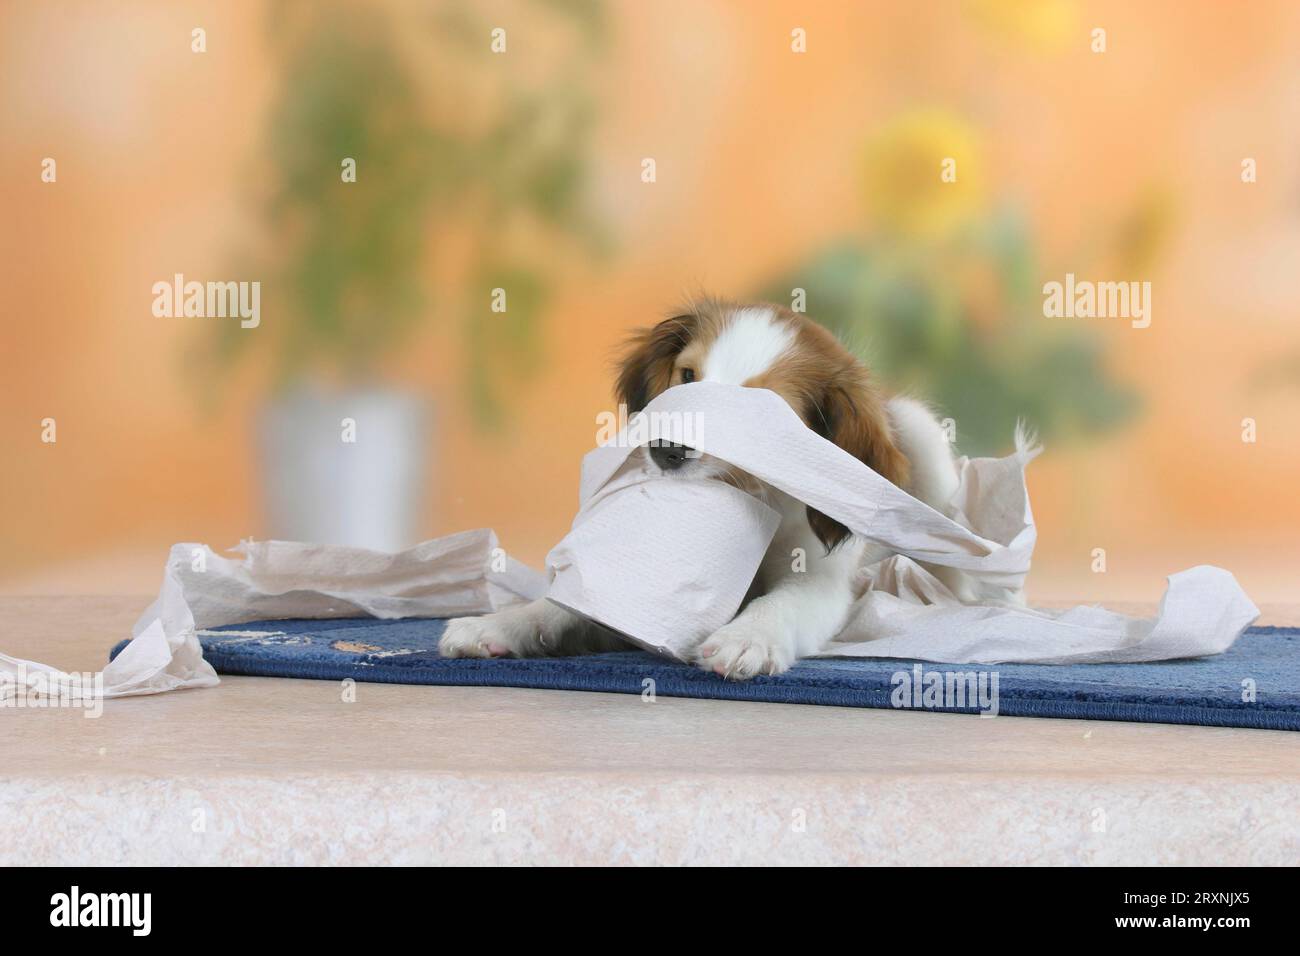 Kooikerhondje, puppy, 3 months, plays with roll of toilet paper Stock Photo